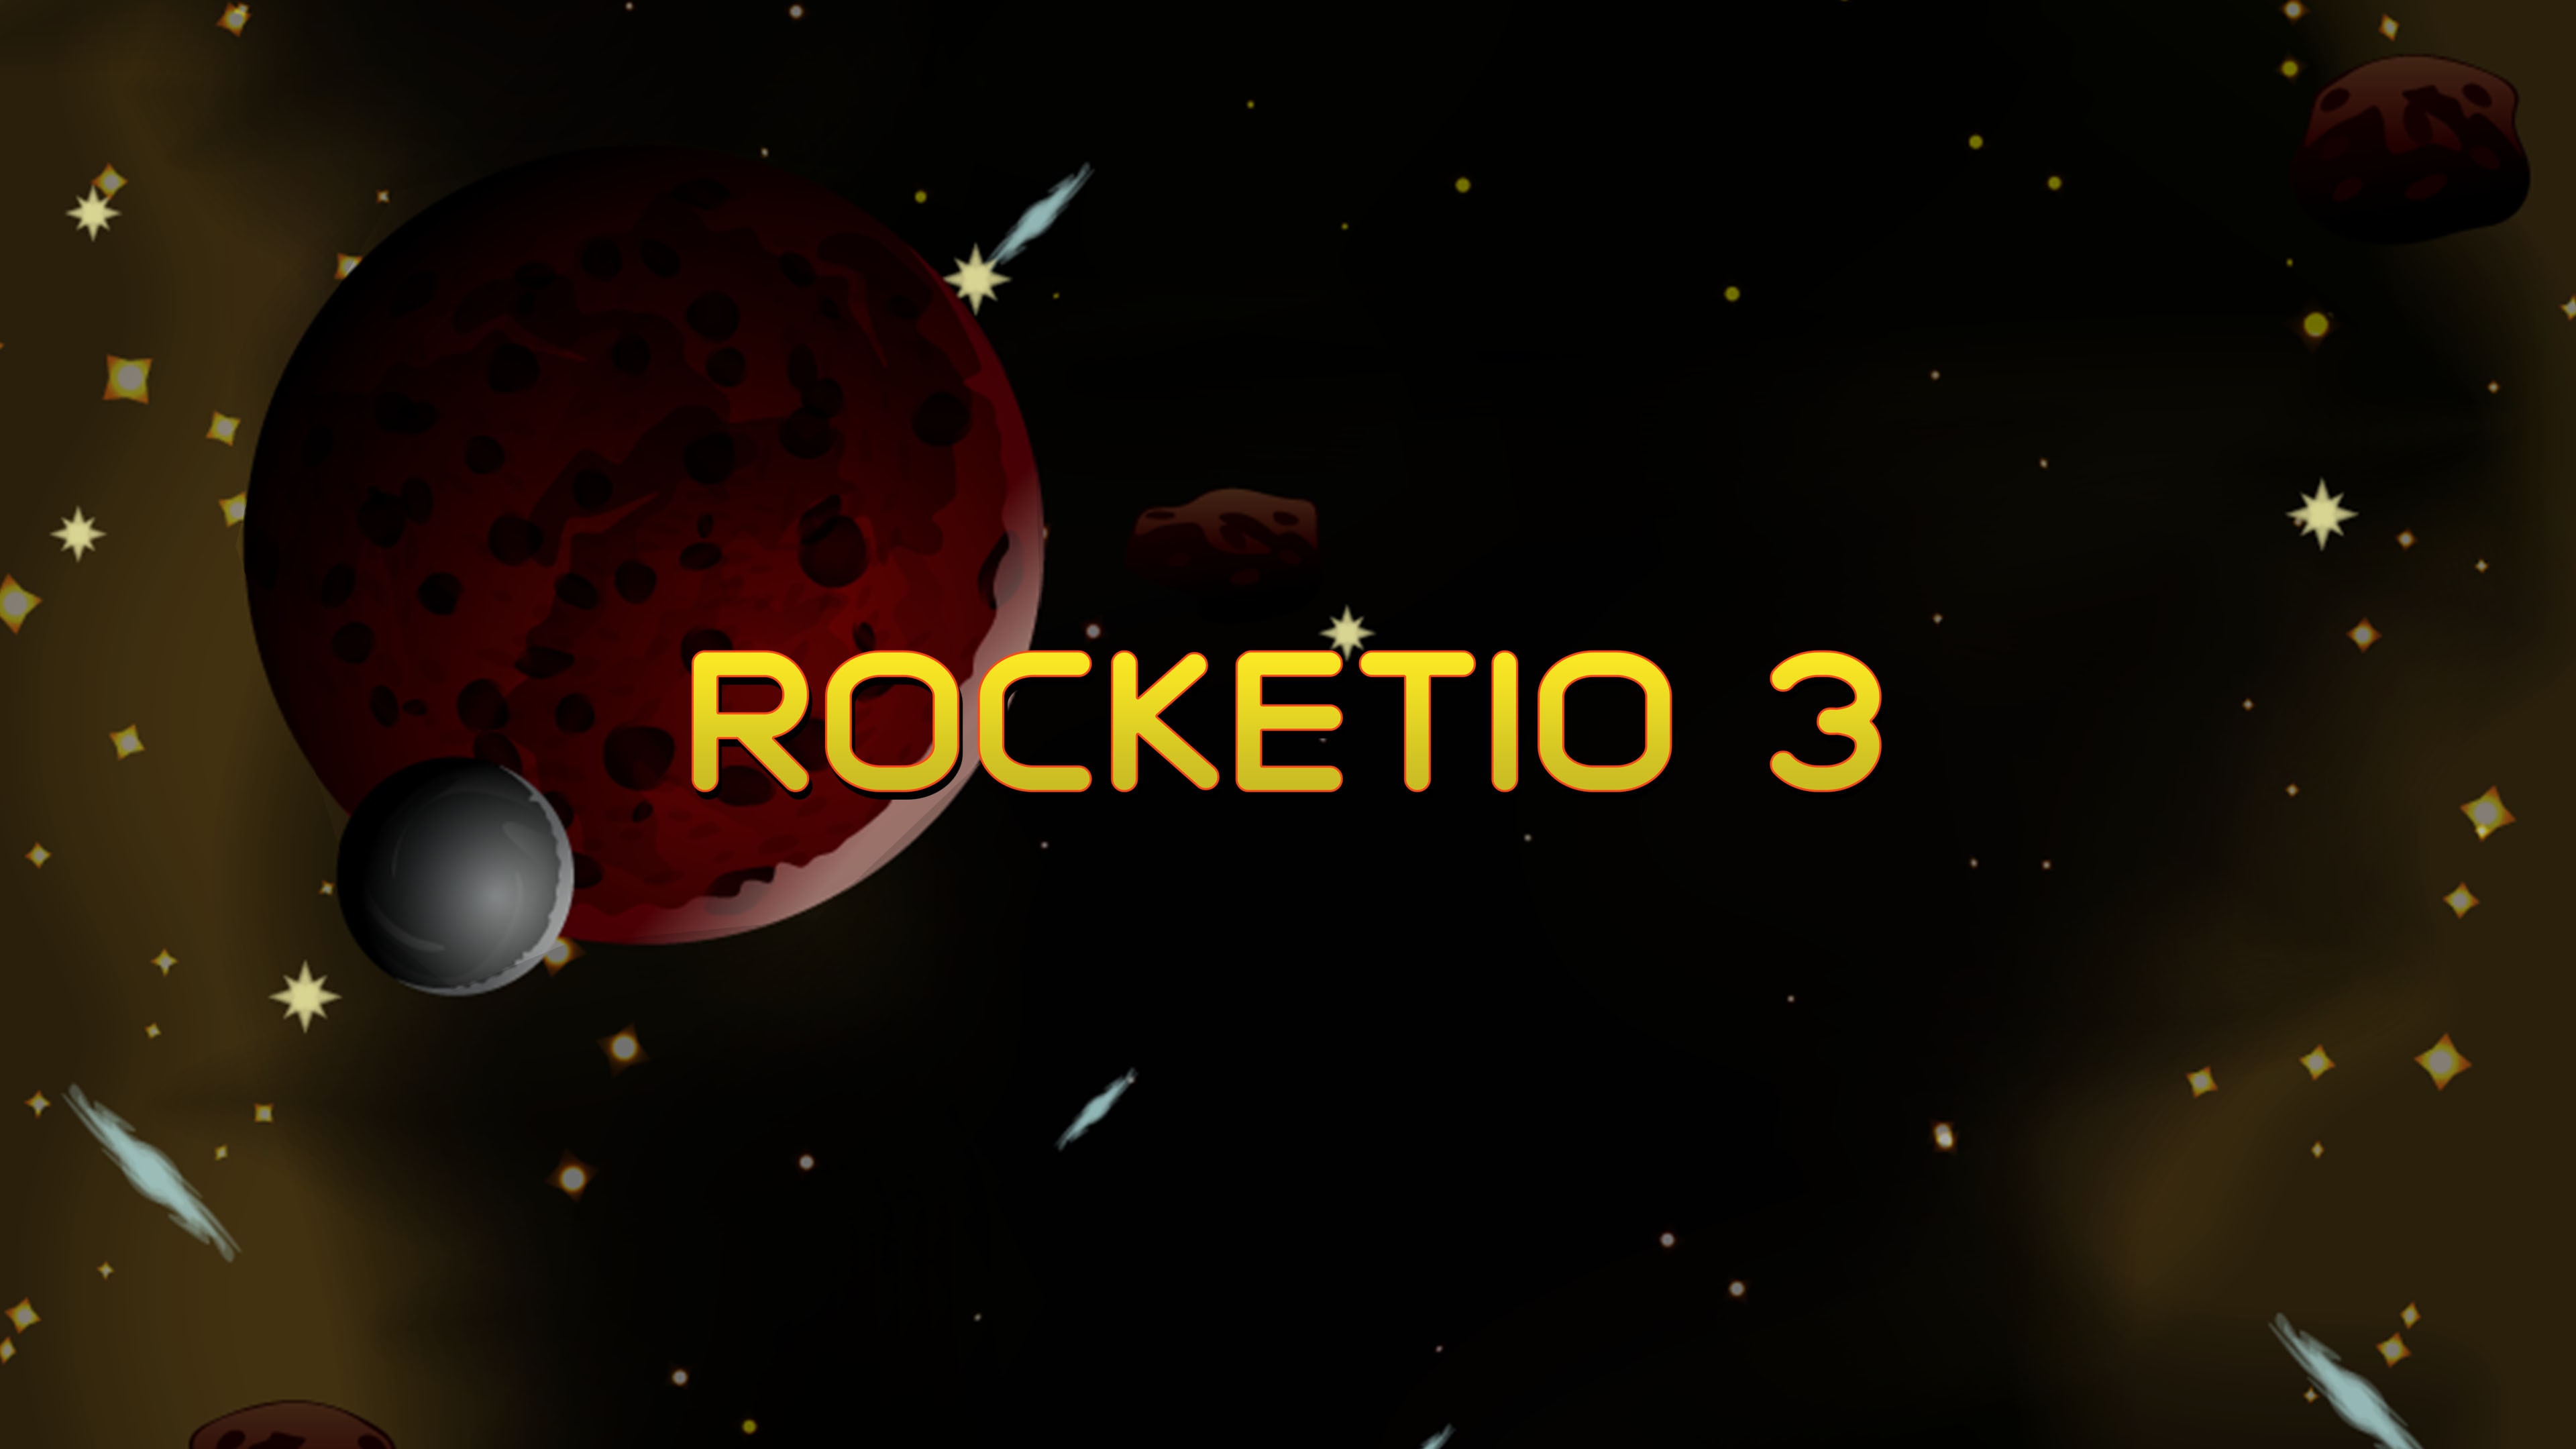 Rocketio 3 (English)